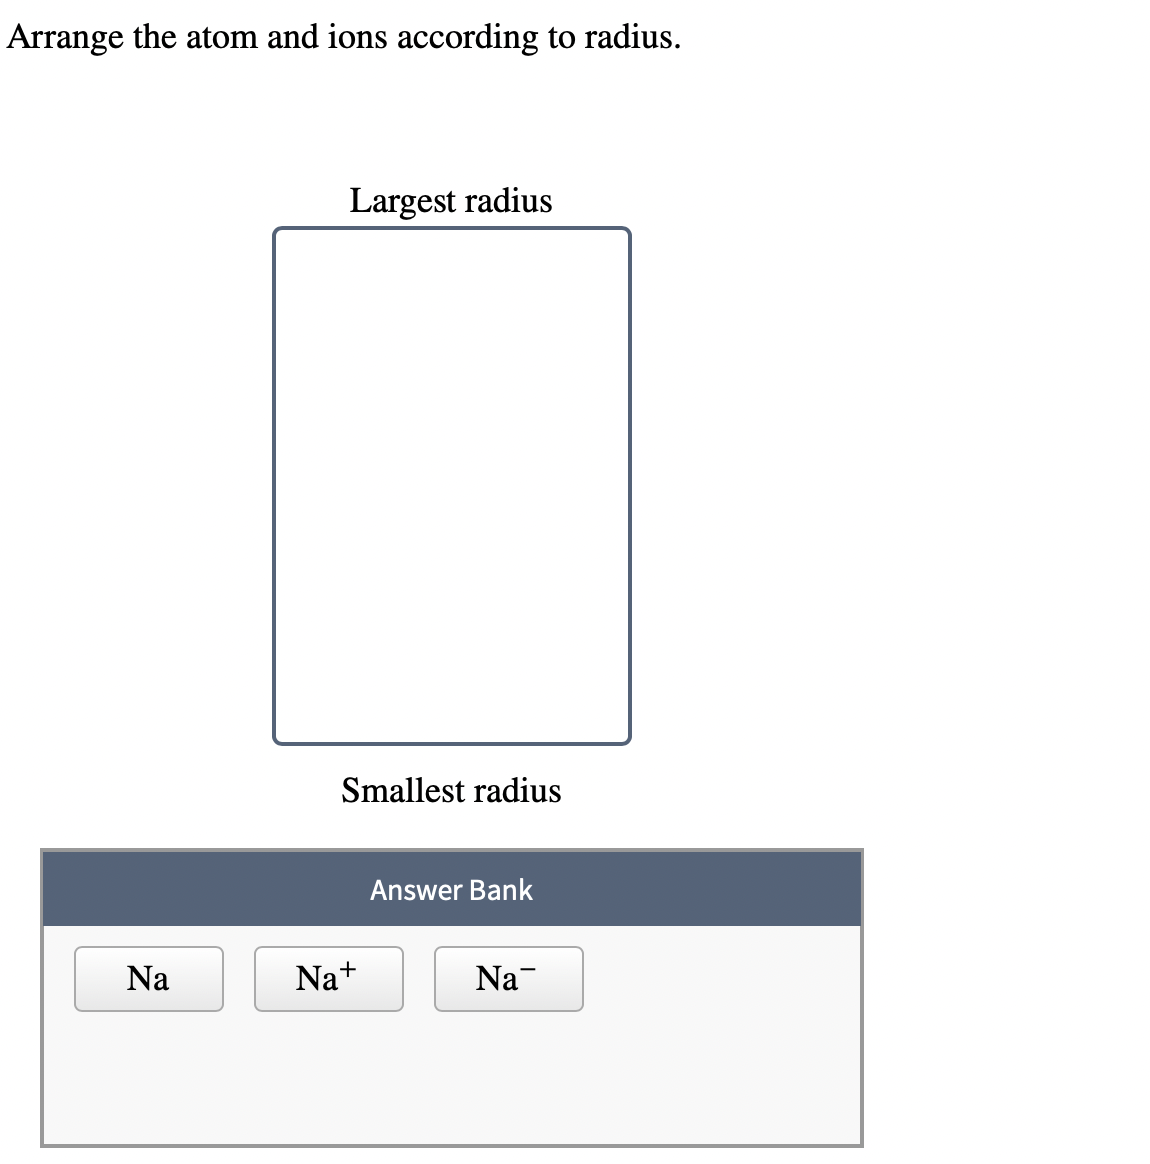 Arrange the atom and ions according to radius.
Na
Largest radius
Smallest radius
Na+
Answer Bank
Na